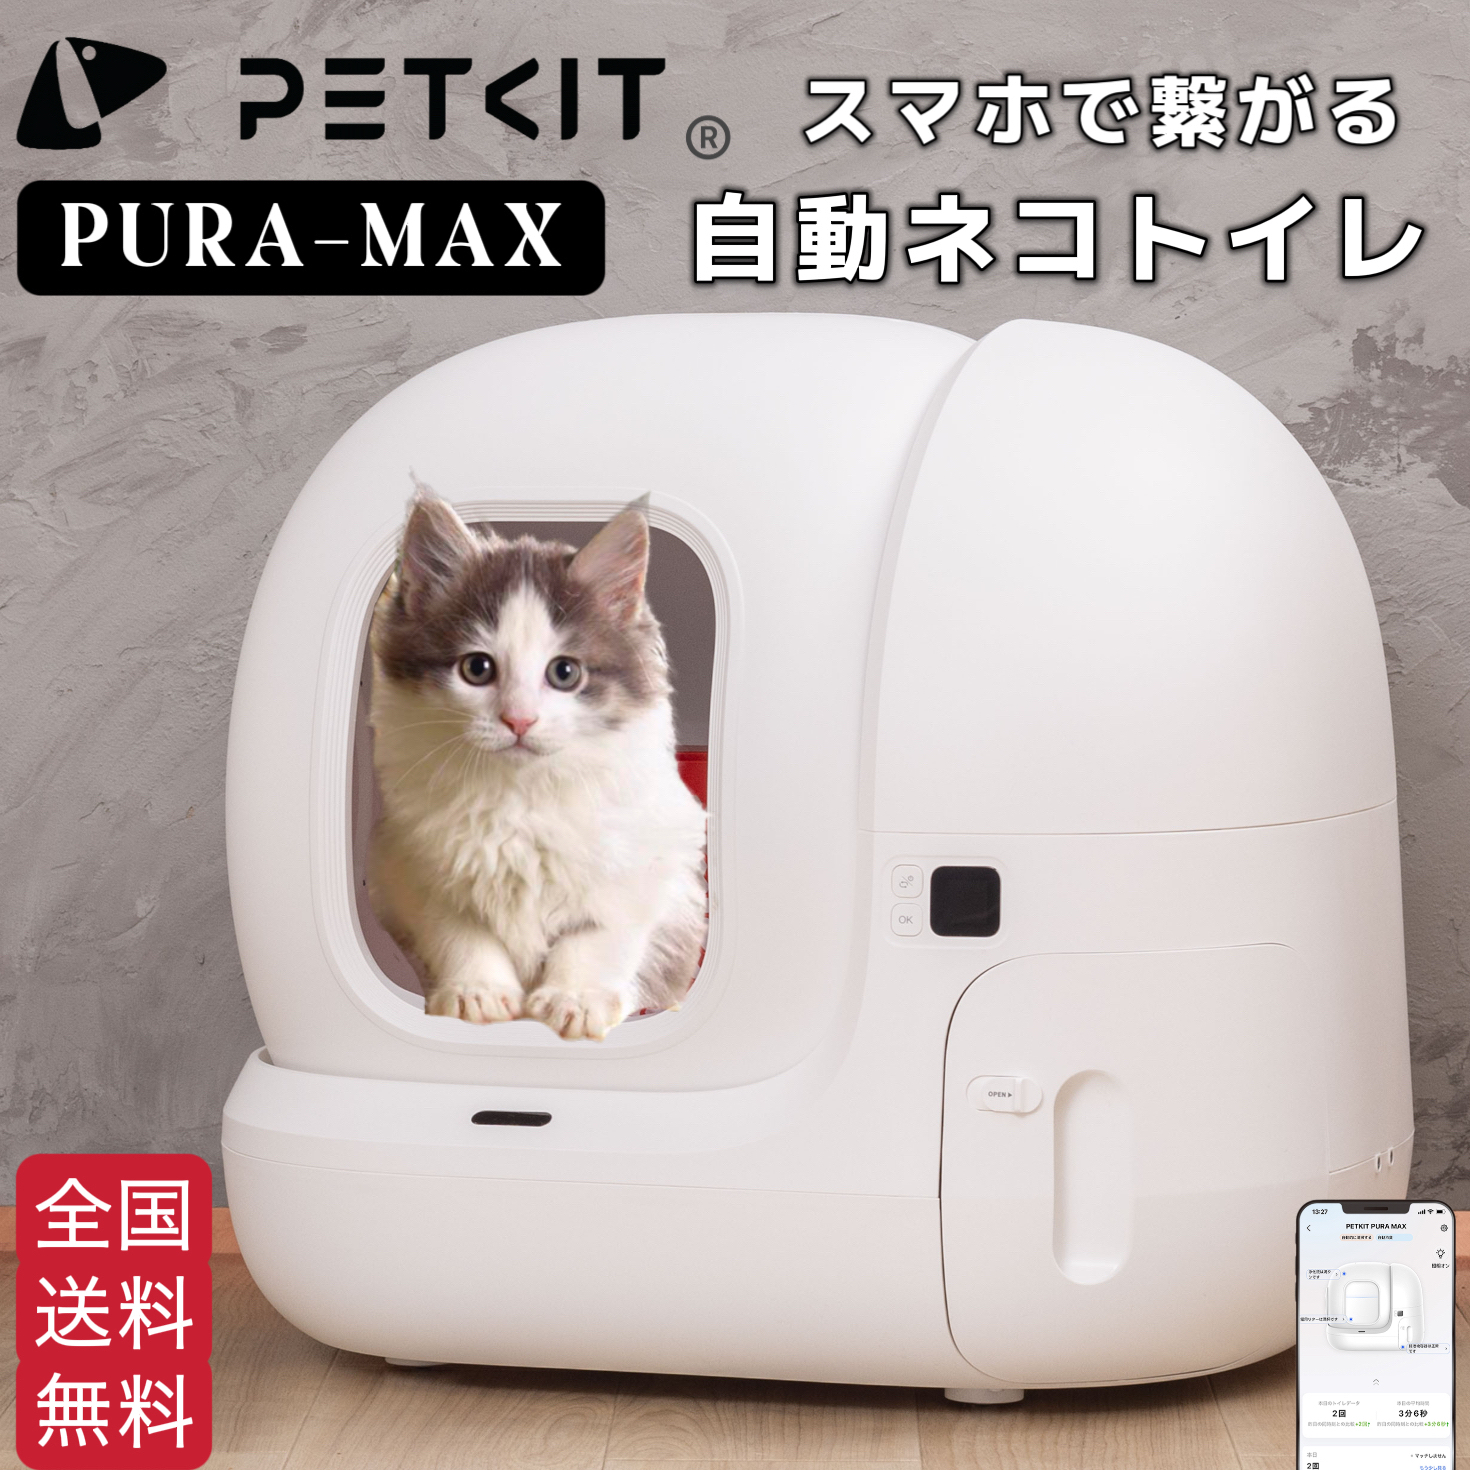 PETKIT-PURA-MAX (高級版) 】自動猫用トイレ ペットキット 自動ネコ